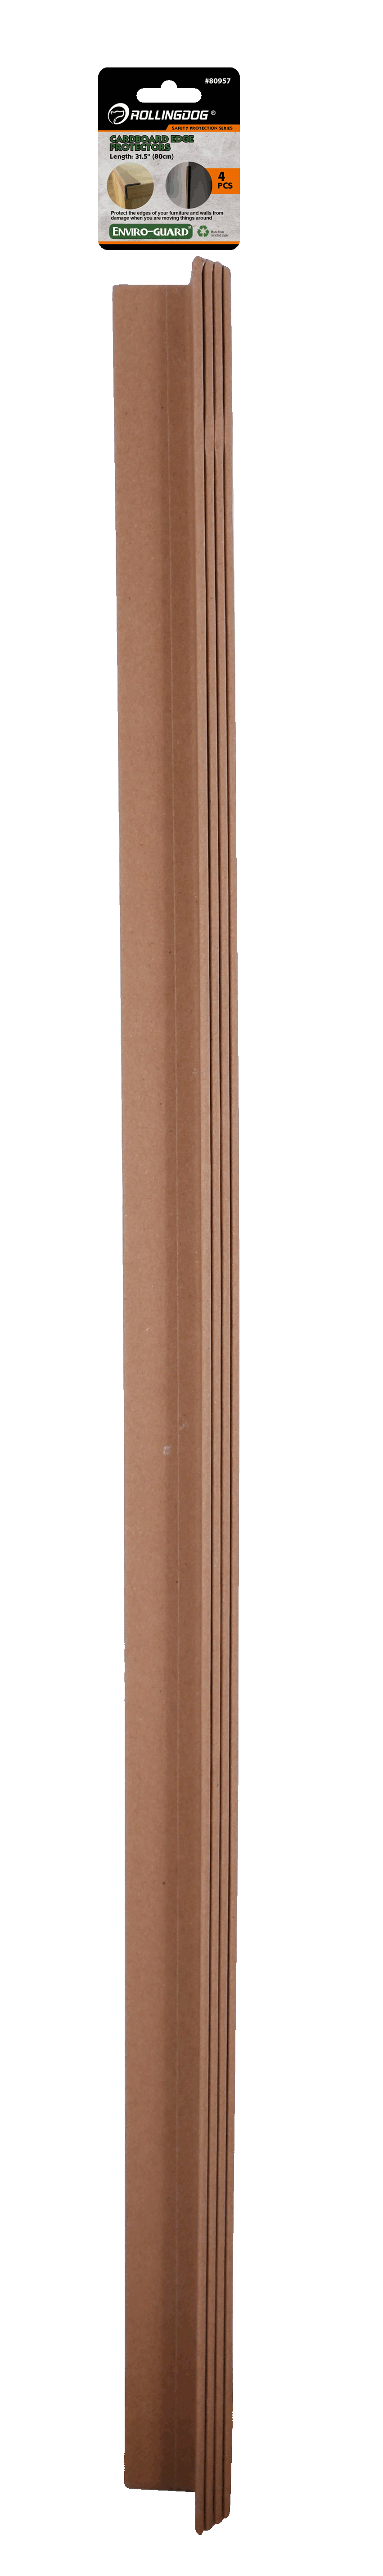 ENVIRO-GUARDTM Cardboard Edge Protectors (4PCS)                                                                                                                                                         